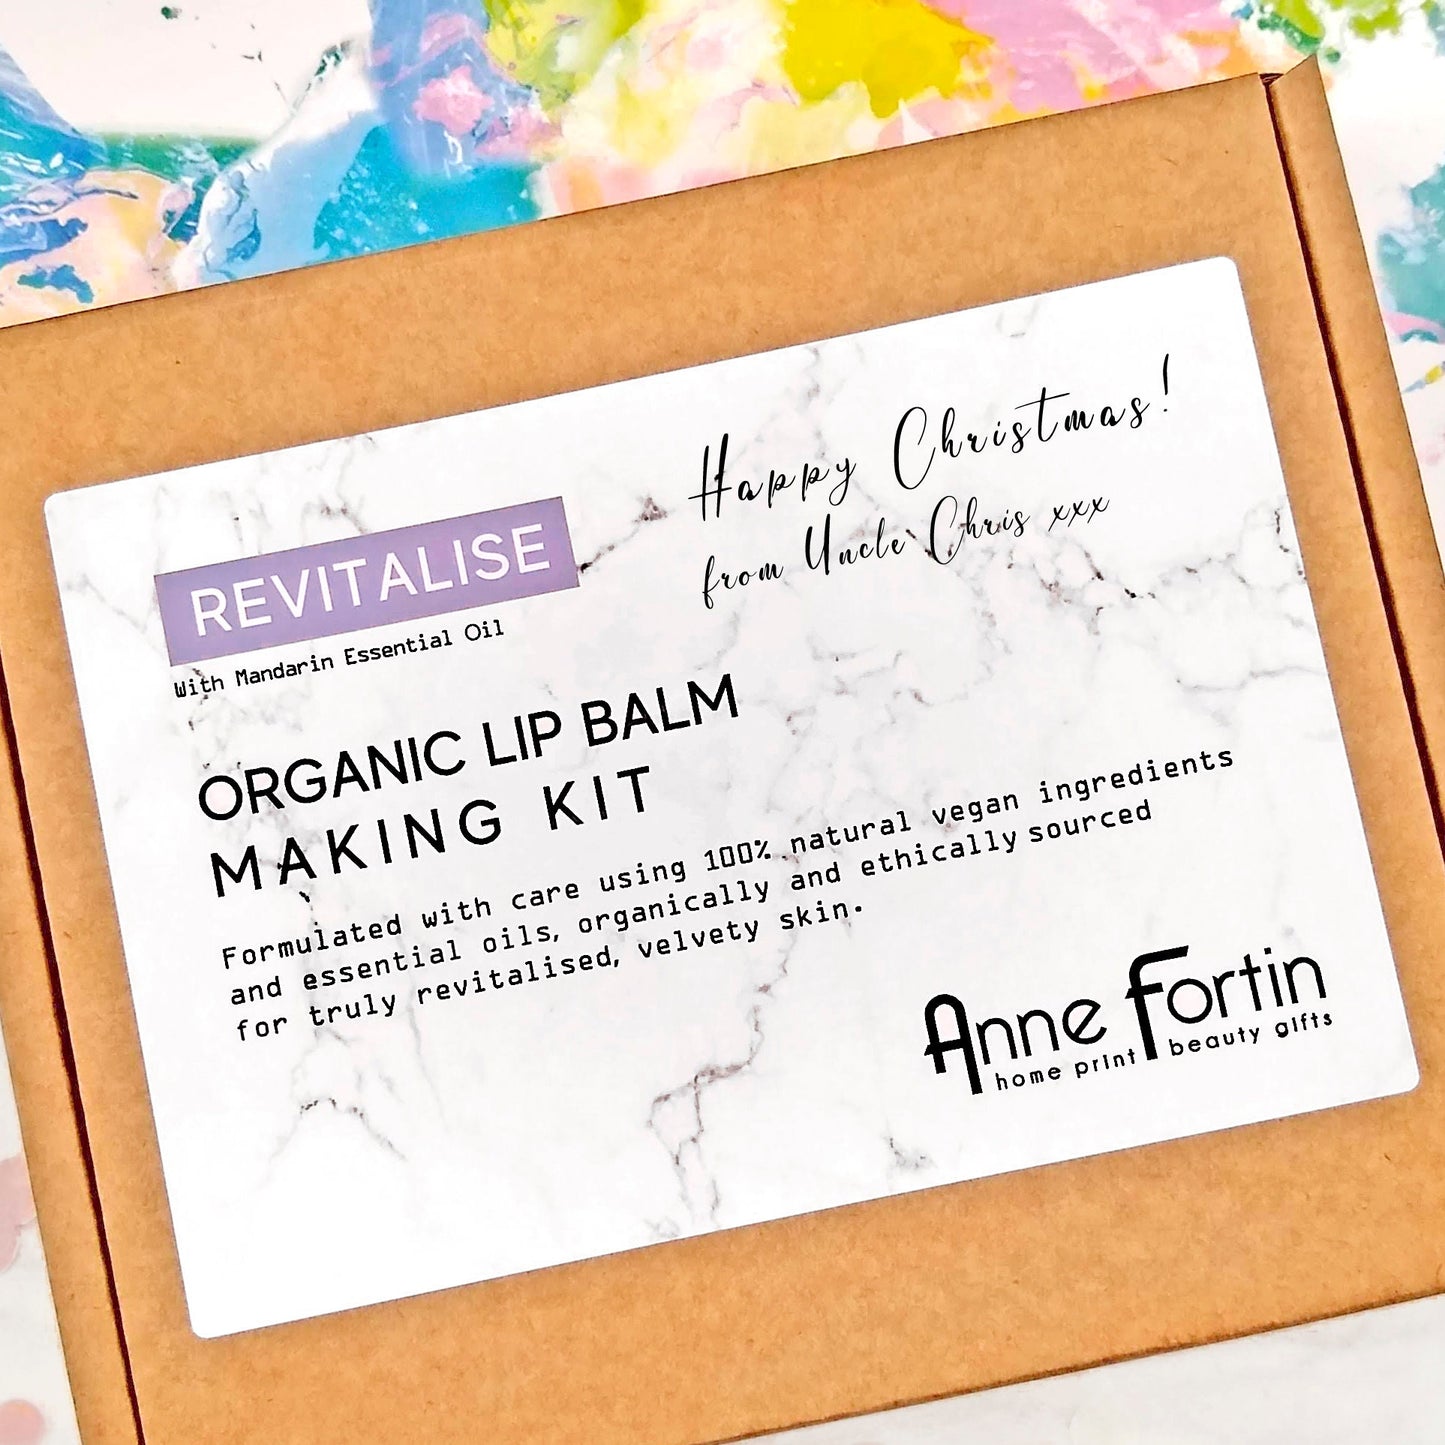 Organic Lip Balm Making Kit Revitalise